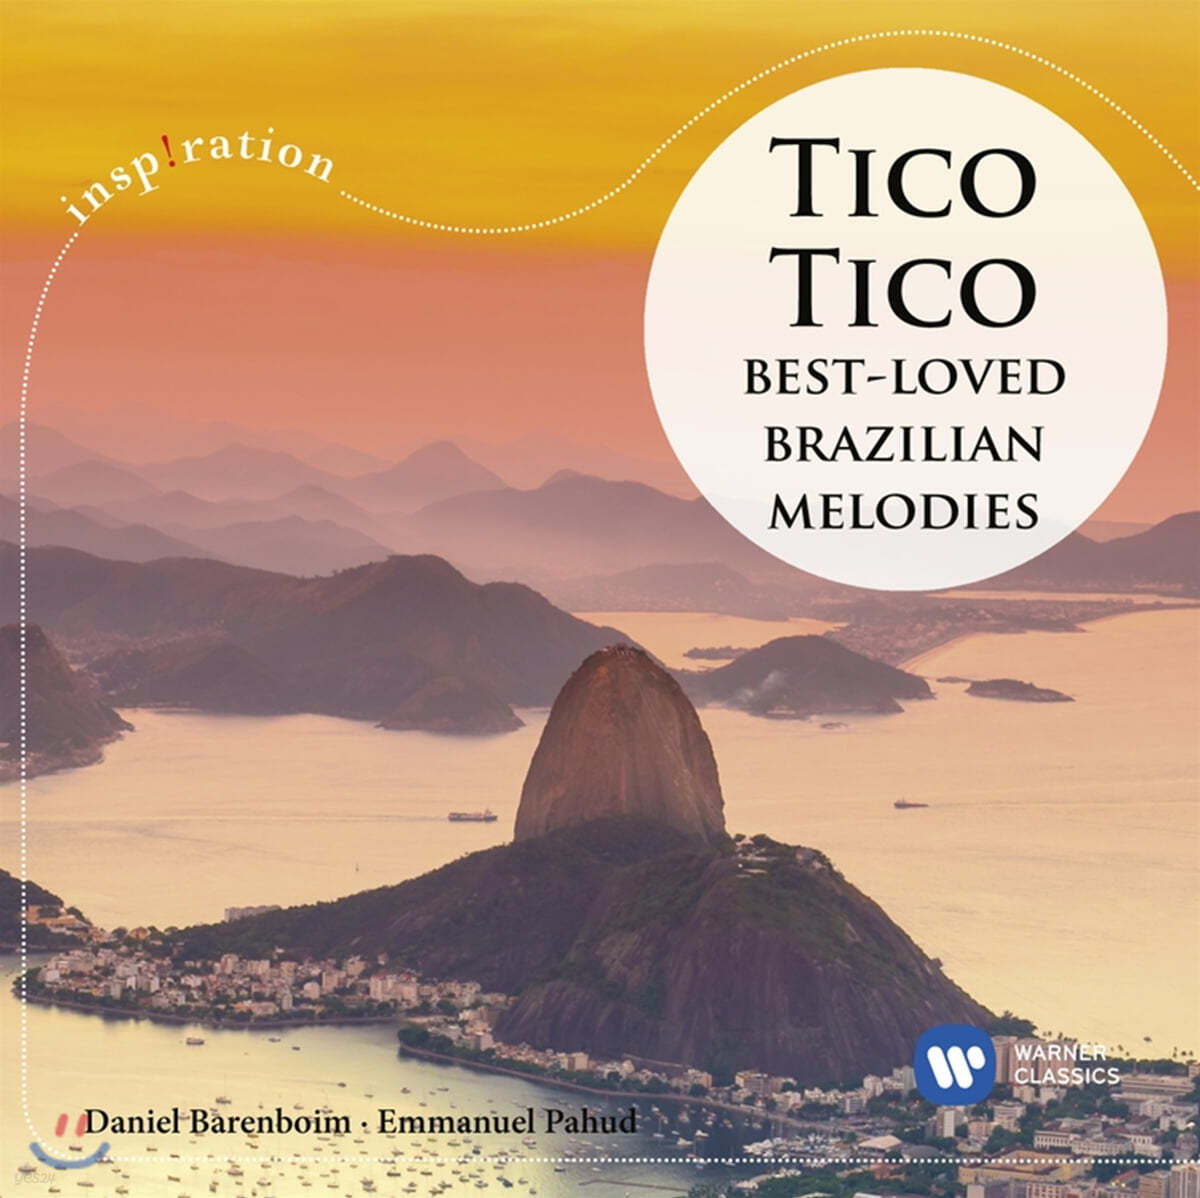 Daniel Barenboim 브라질 랩소디: 티코티코 (Best Loved Brazilian Melodies: Tico Tico)